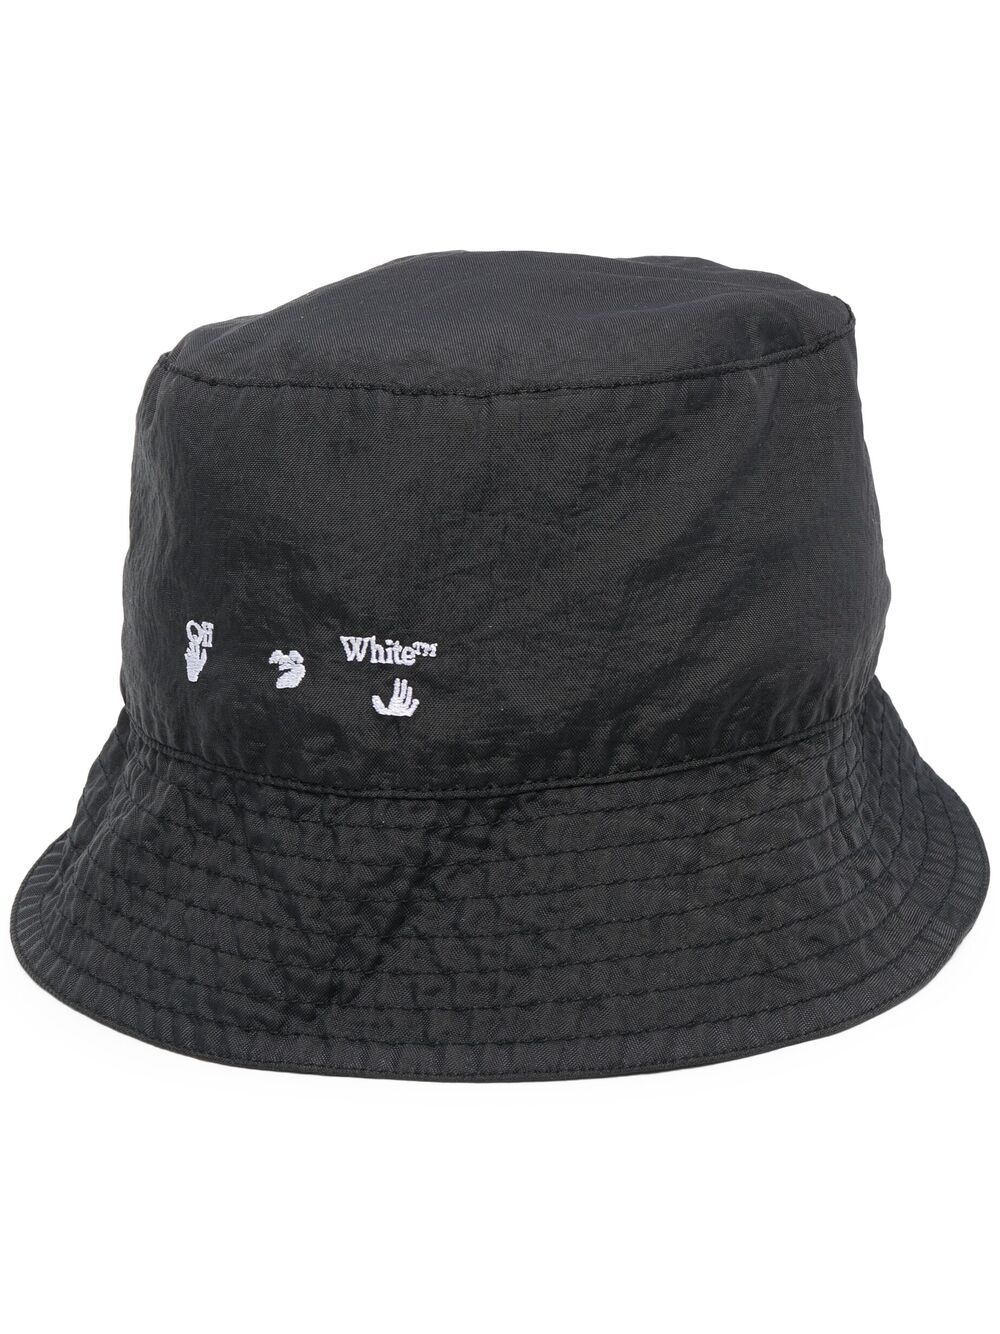 OFF-WHITE OW Polyester Bucket Hat Black/White